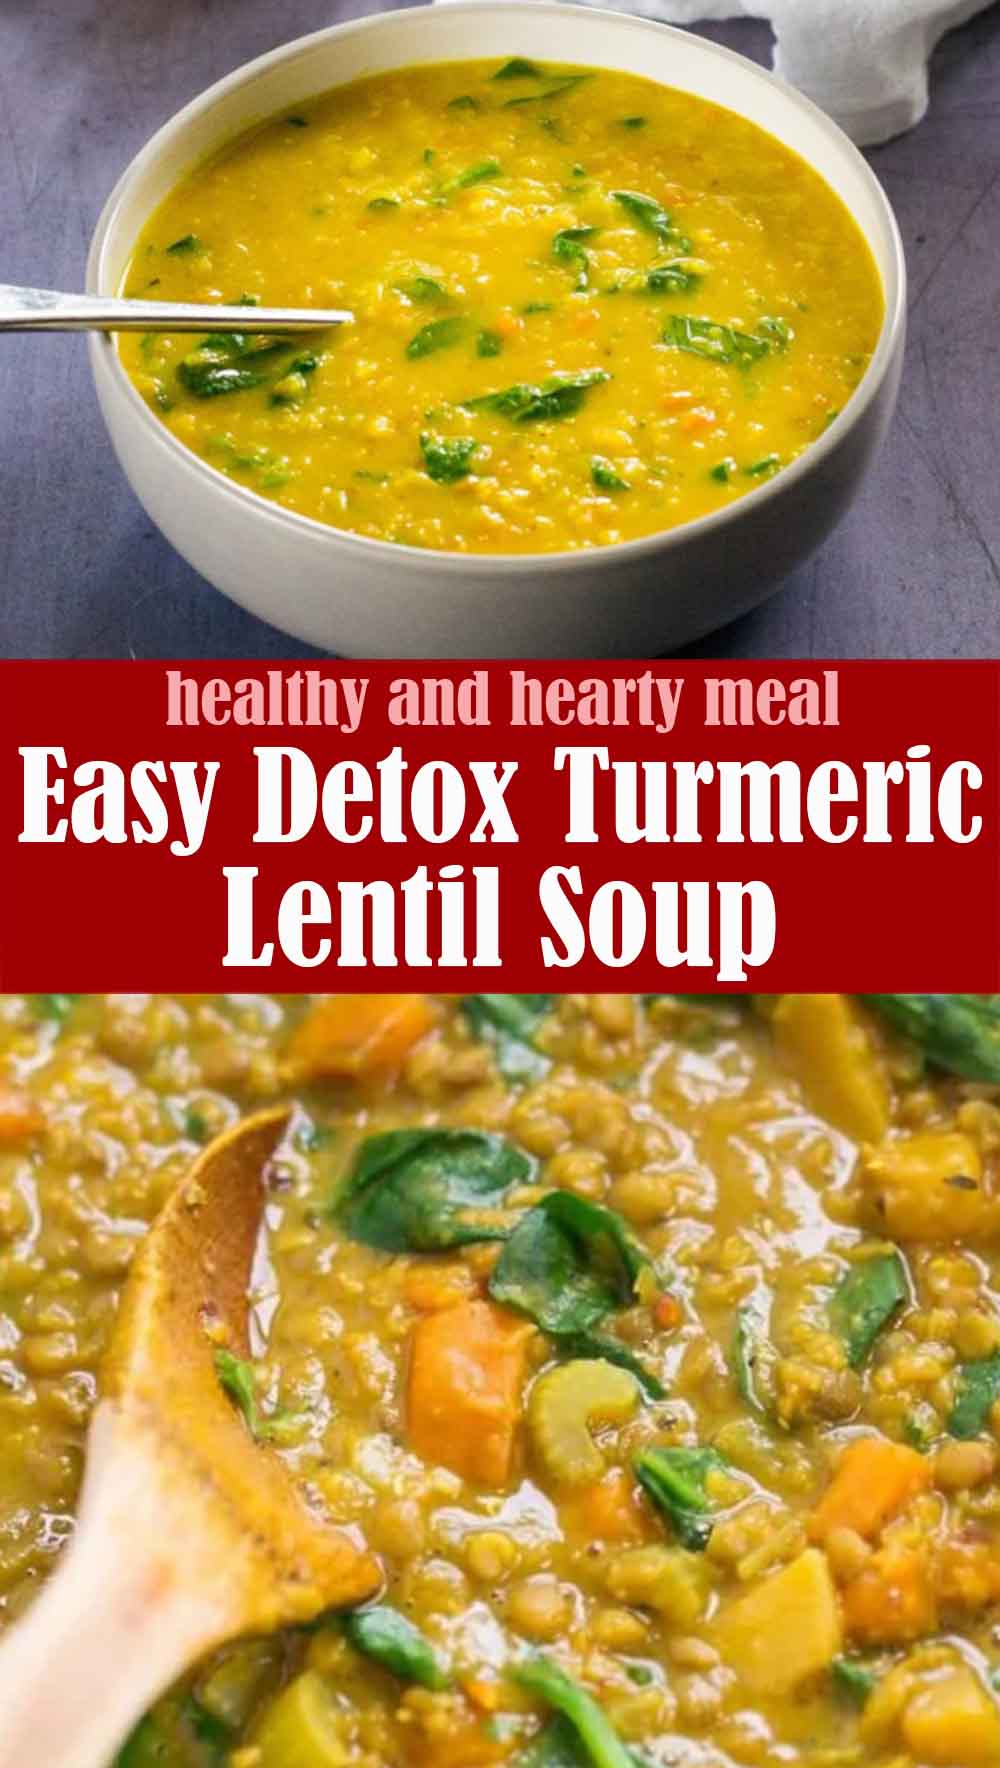 Easy Detox Turmeric Lentil Soup